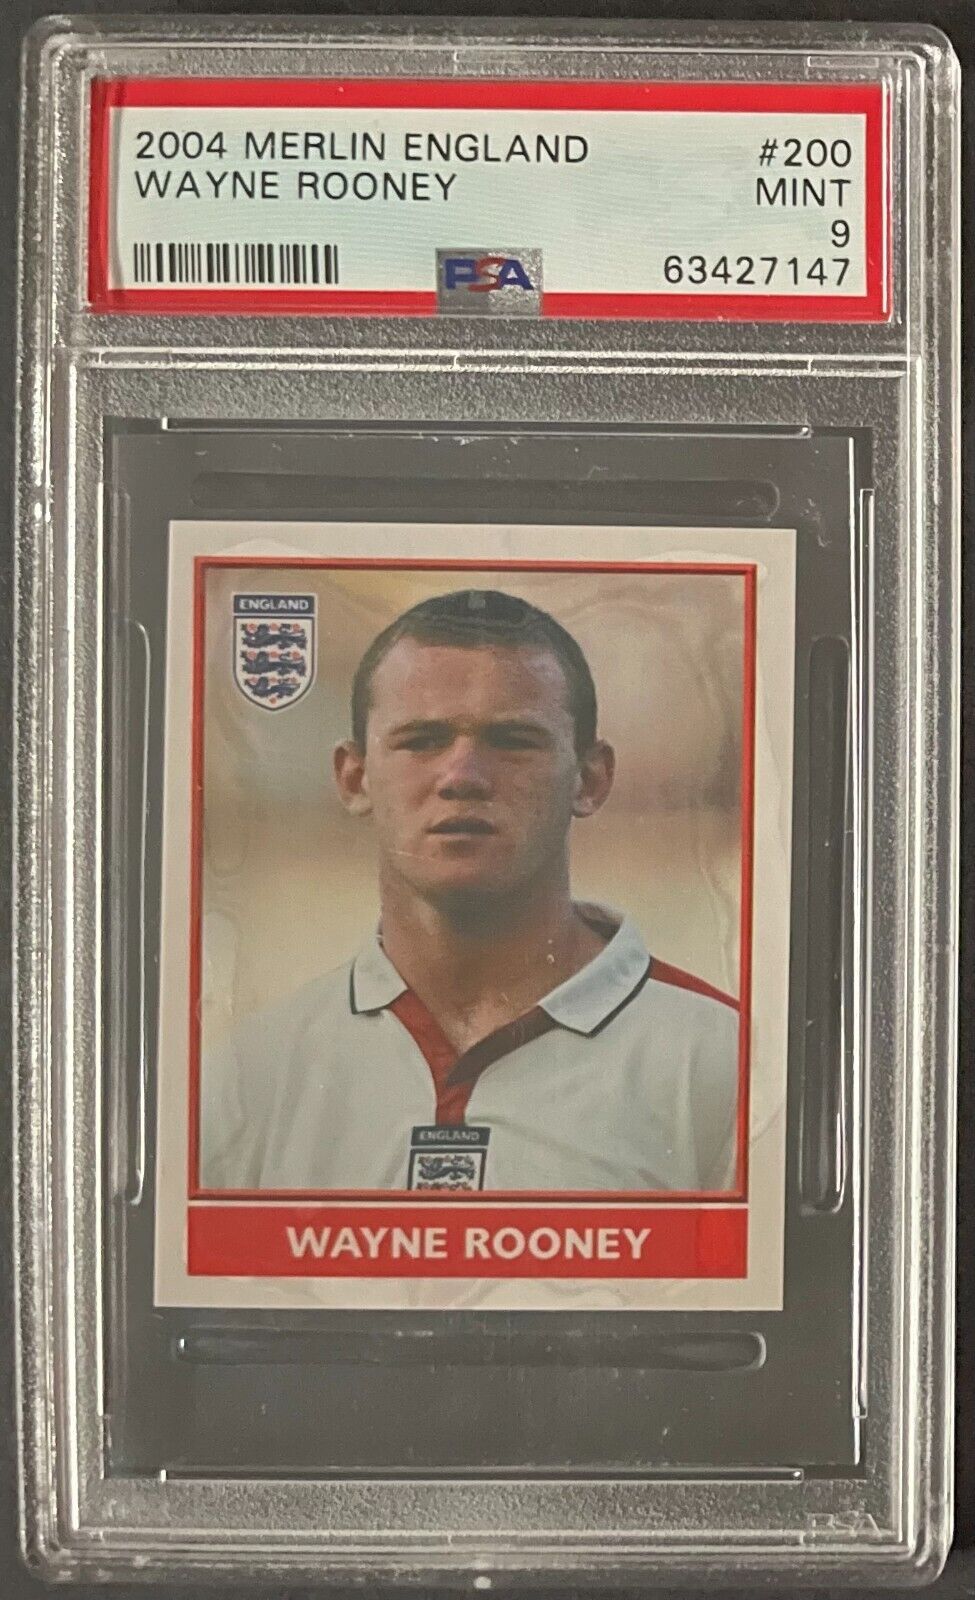 2004 Merlin England #200 Wayne Rooney PSA MINT 9 Soccer Football Sticker Card